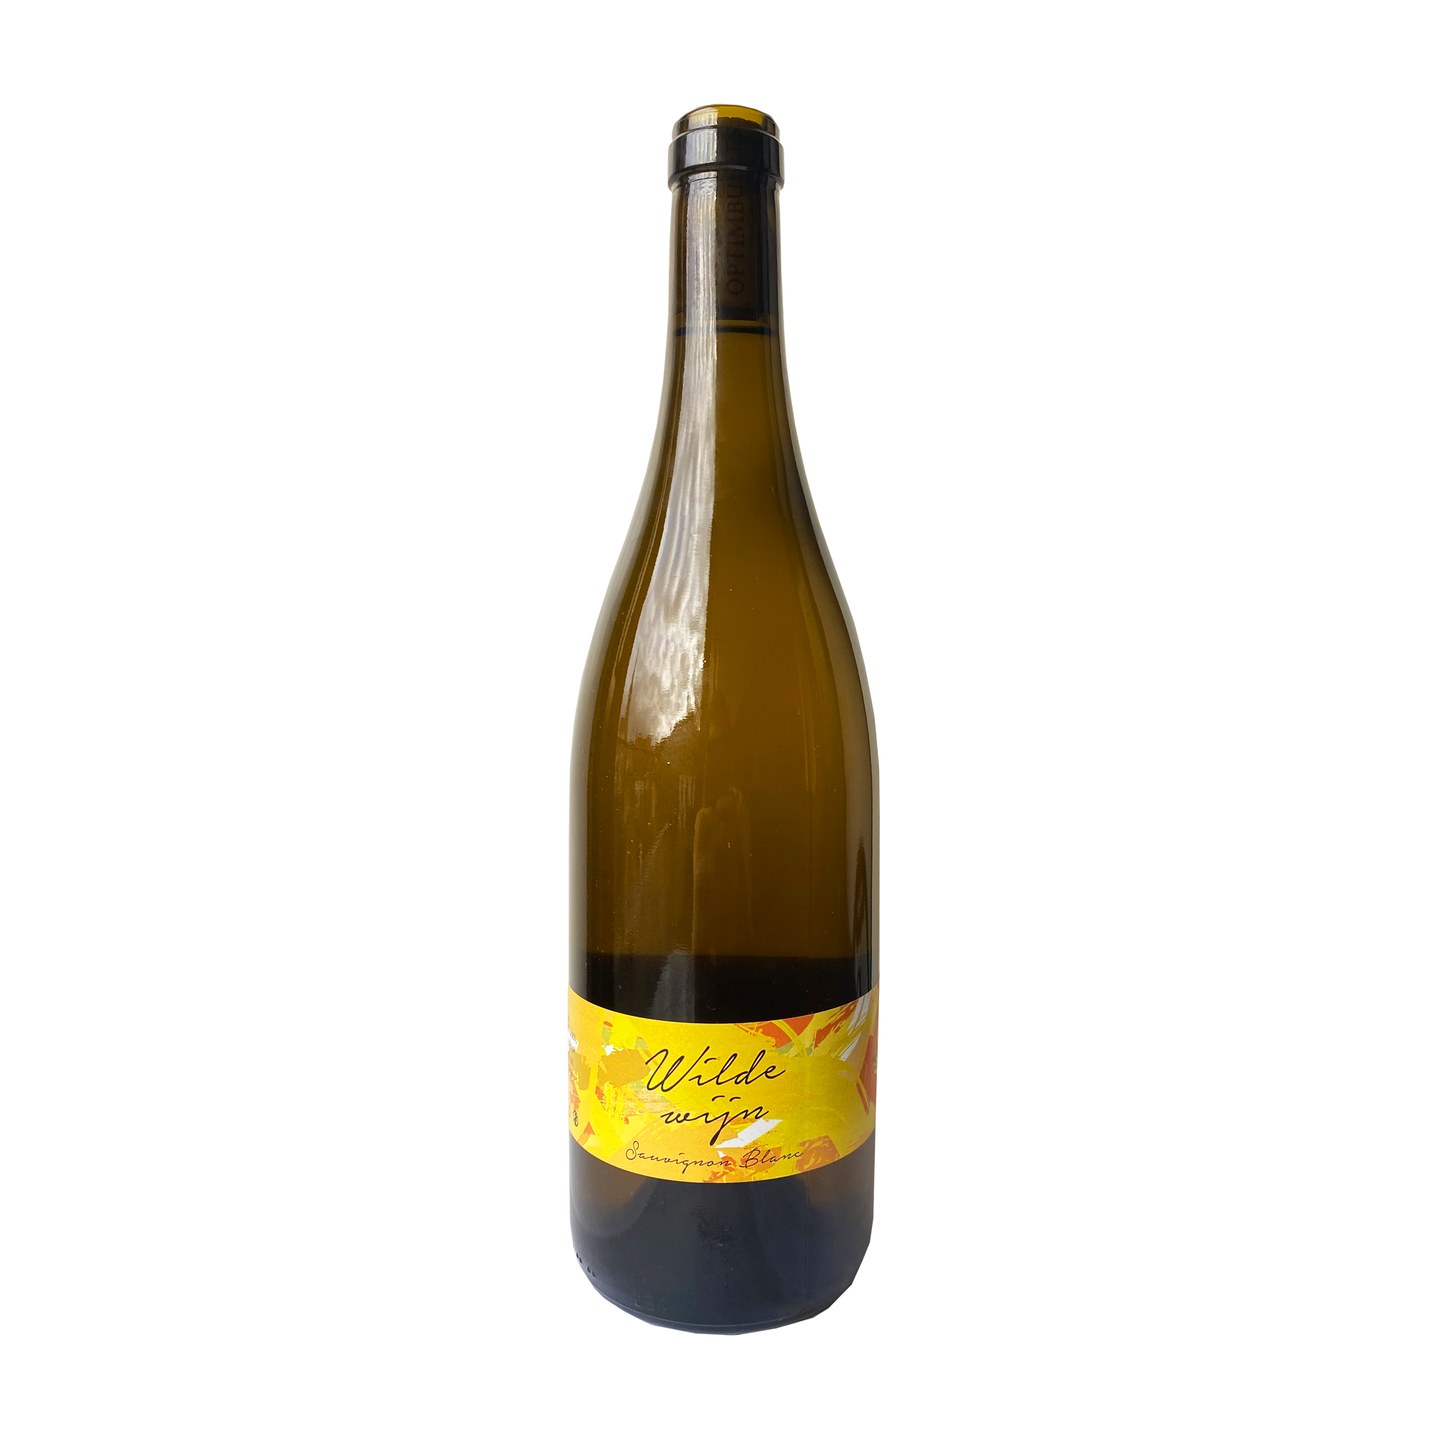 Optimbulles - Wilde Wijn - Sauvignon Blanc 2019